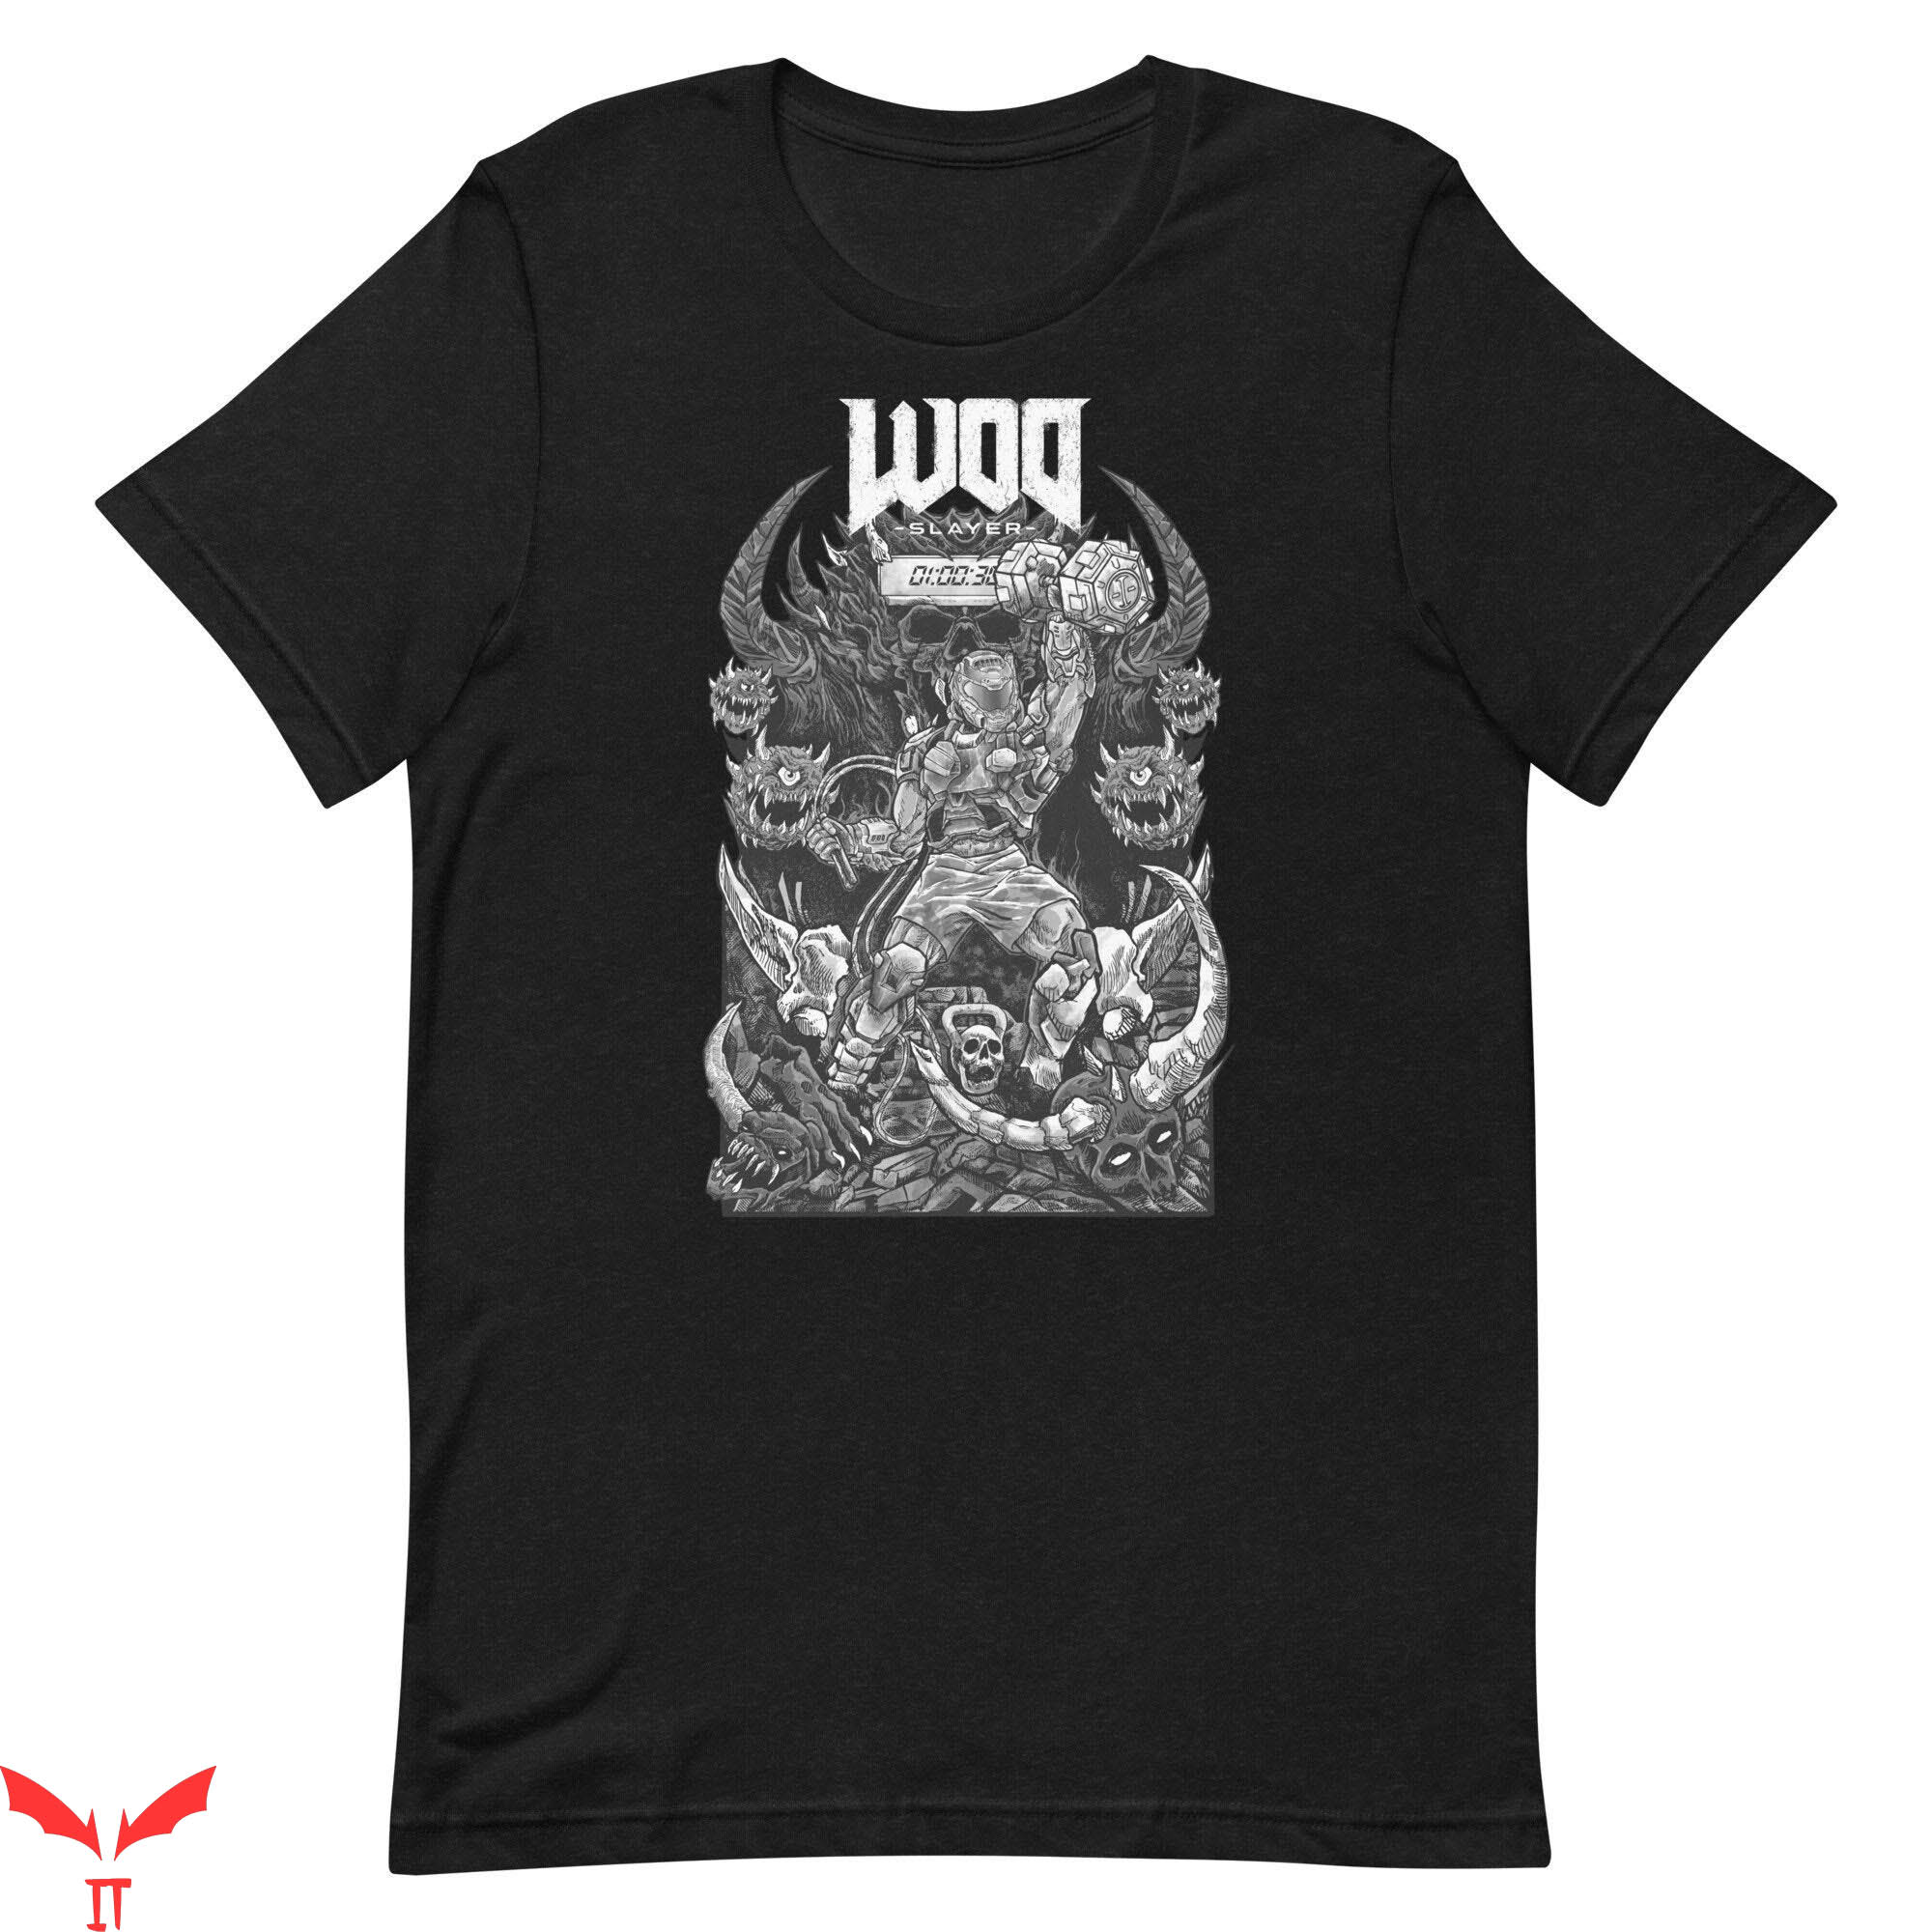 Vintage Slayer T-Shirt Wod Slayer Retro Rock Style Tee Shirt